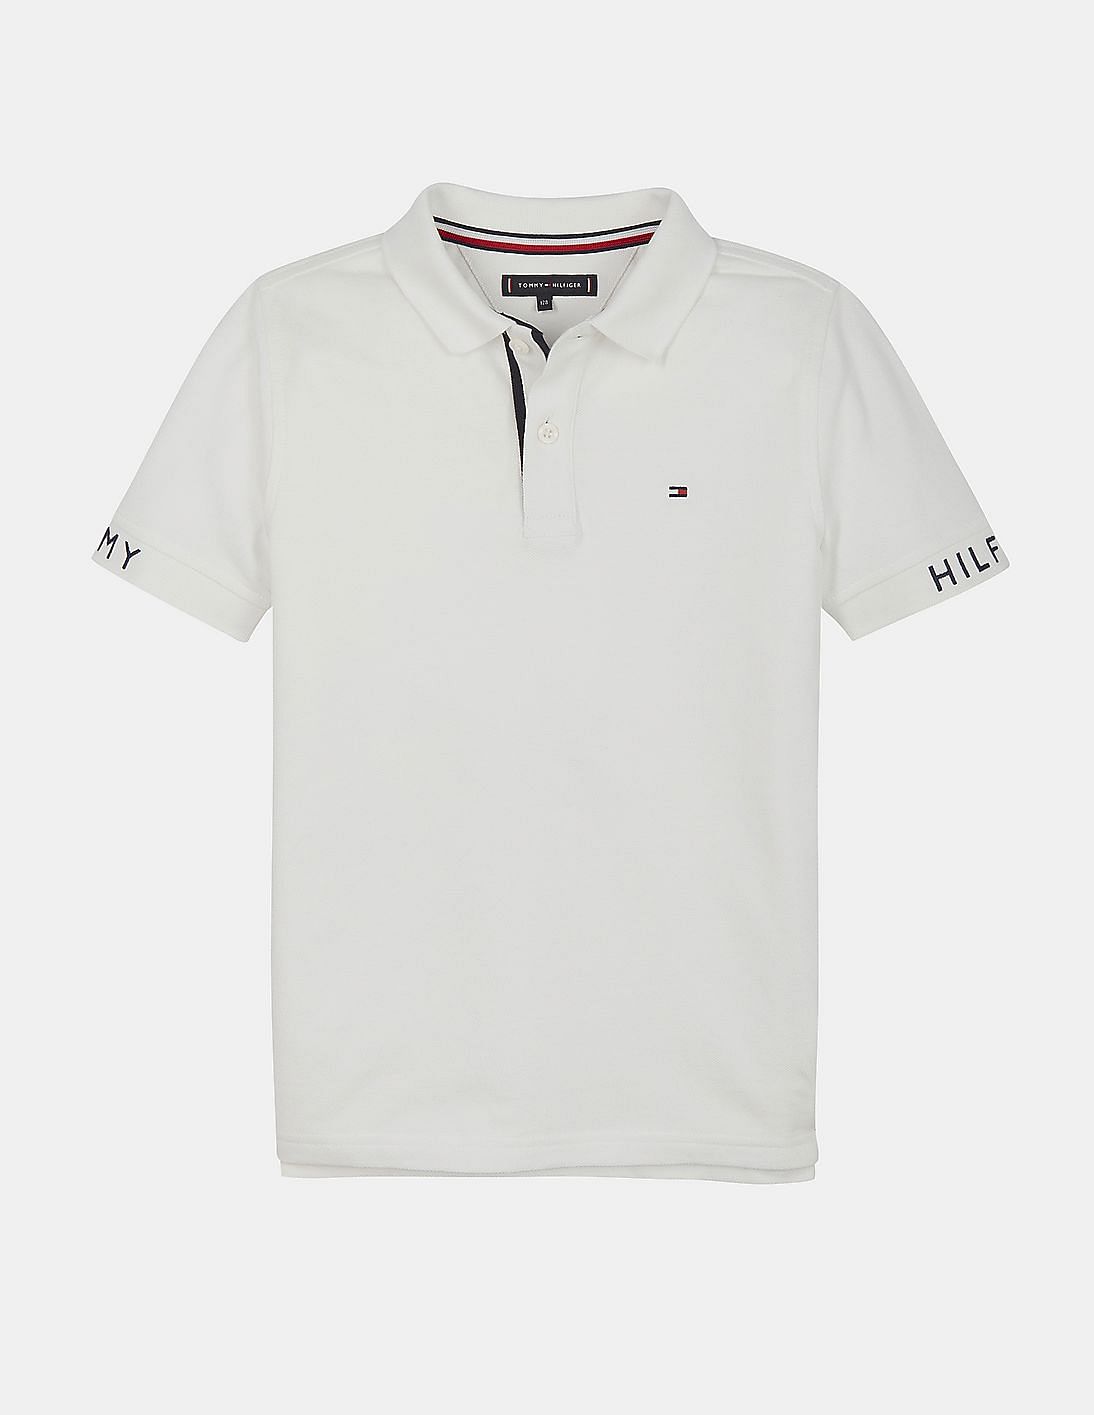 Buy Tommy Hilfiger Kids Boys White Short Sleeve Cotton Polo Shirt ...